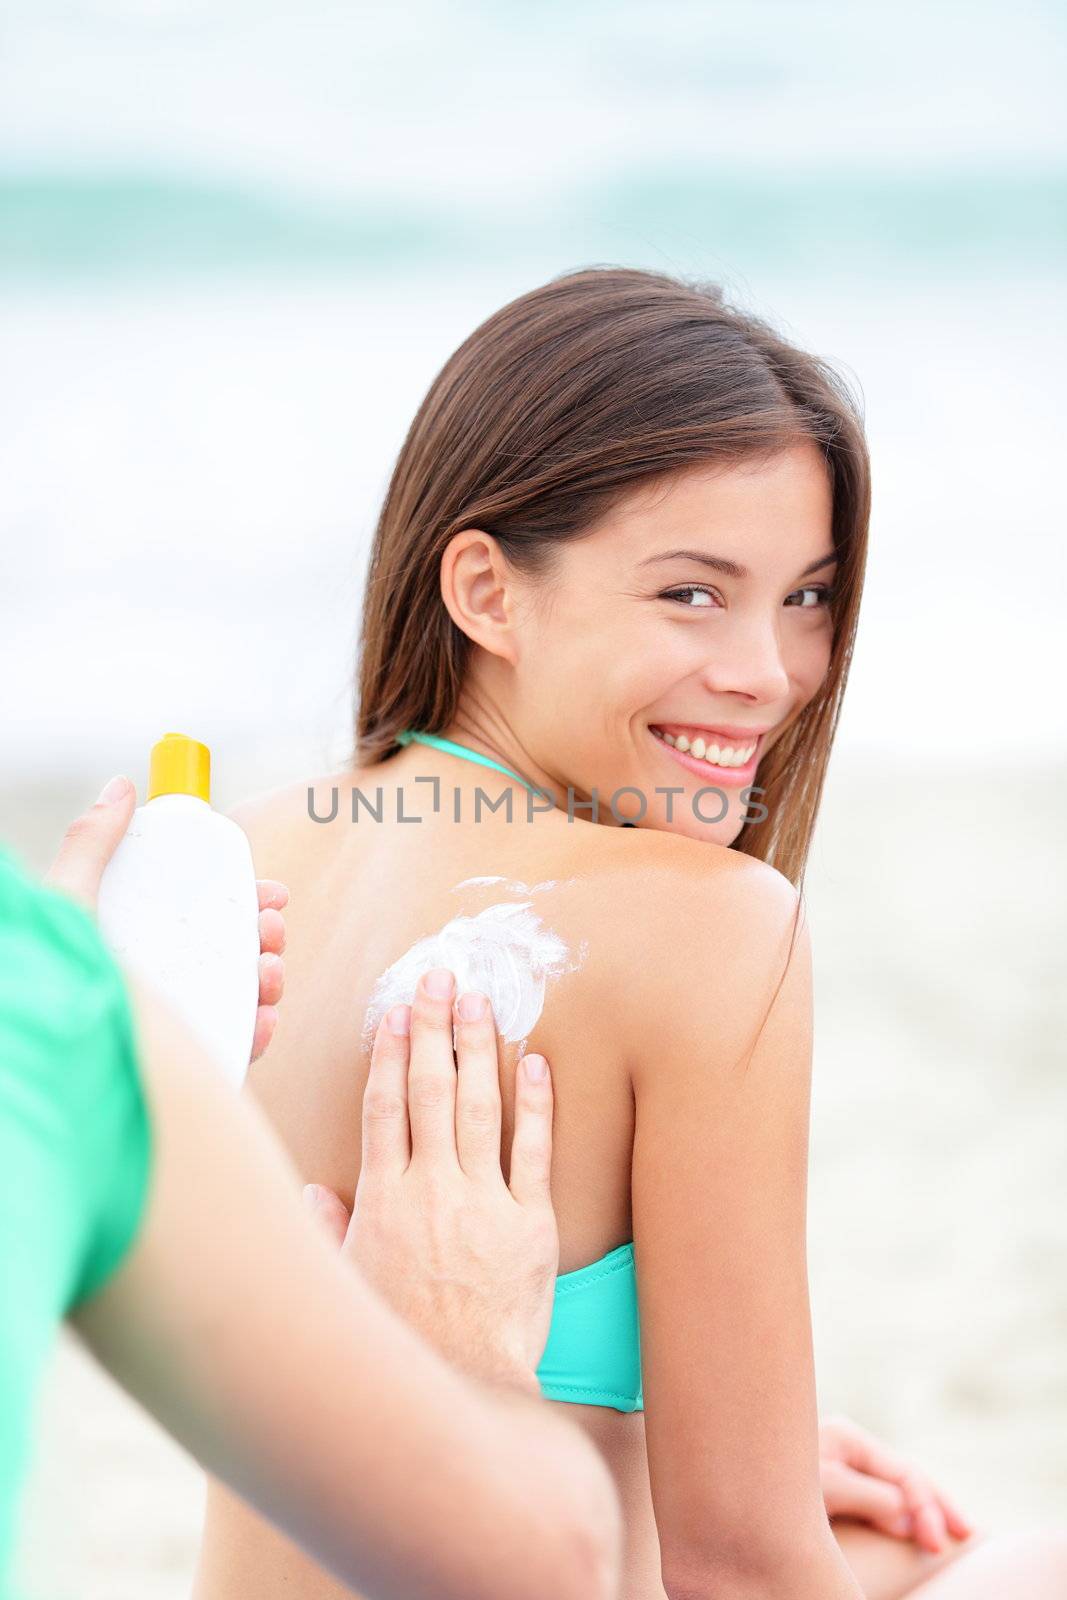 Sunscreen on beach vacation by Maridav